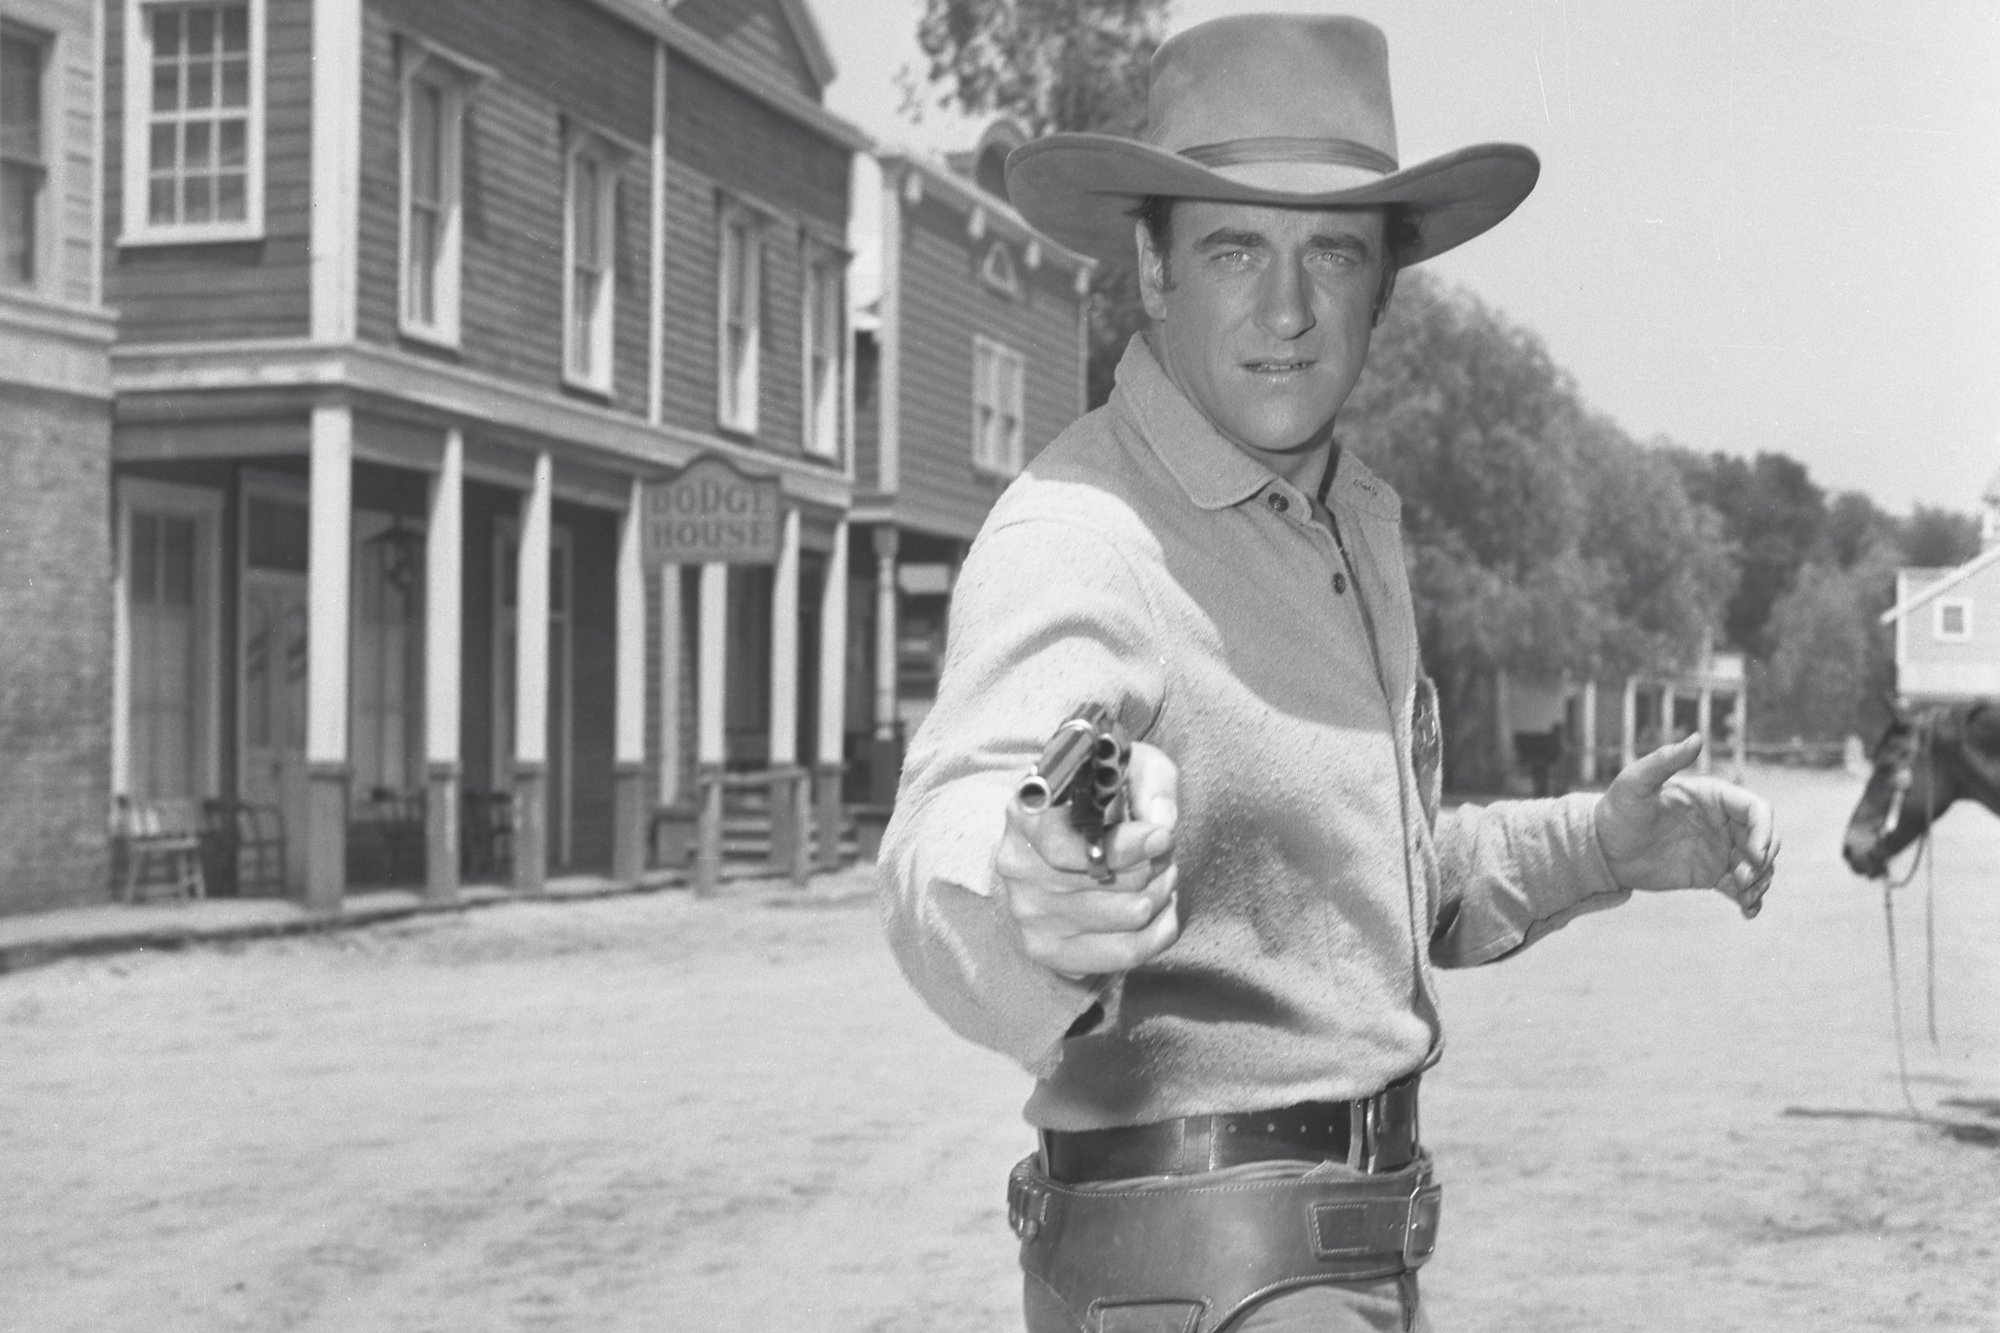 'Gunsmoke' James Arness as Marshall Matt Dillon wearing his Western costume and holding out his gun toward the camera